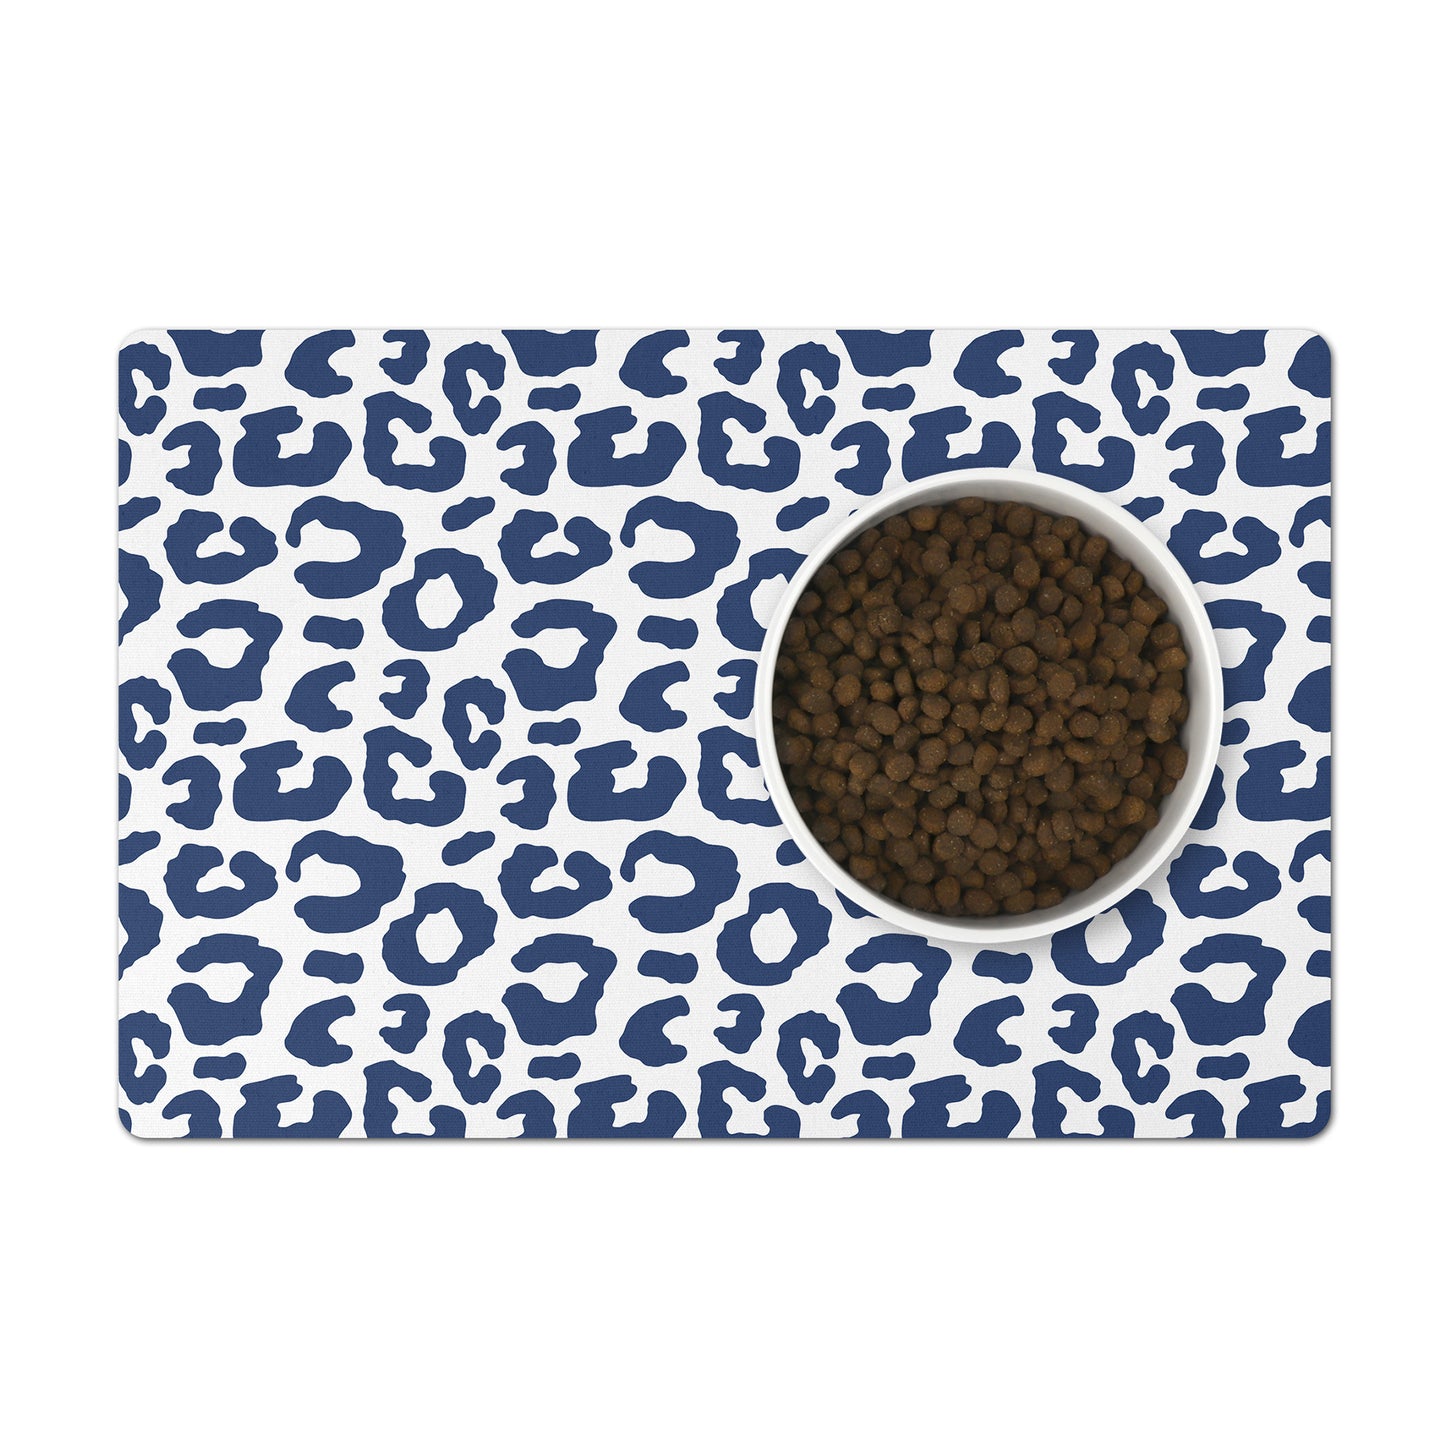 Pet Feeding Mat, Leopard Print, True Navy Blue and White